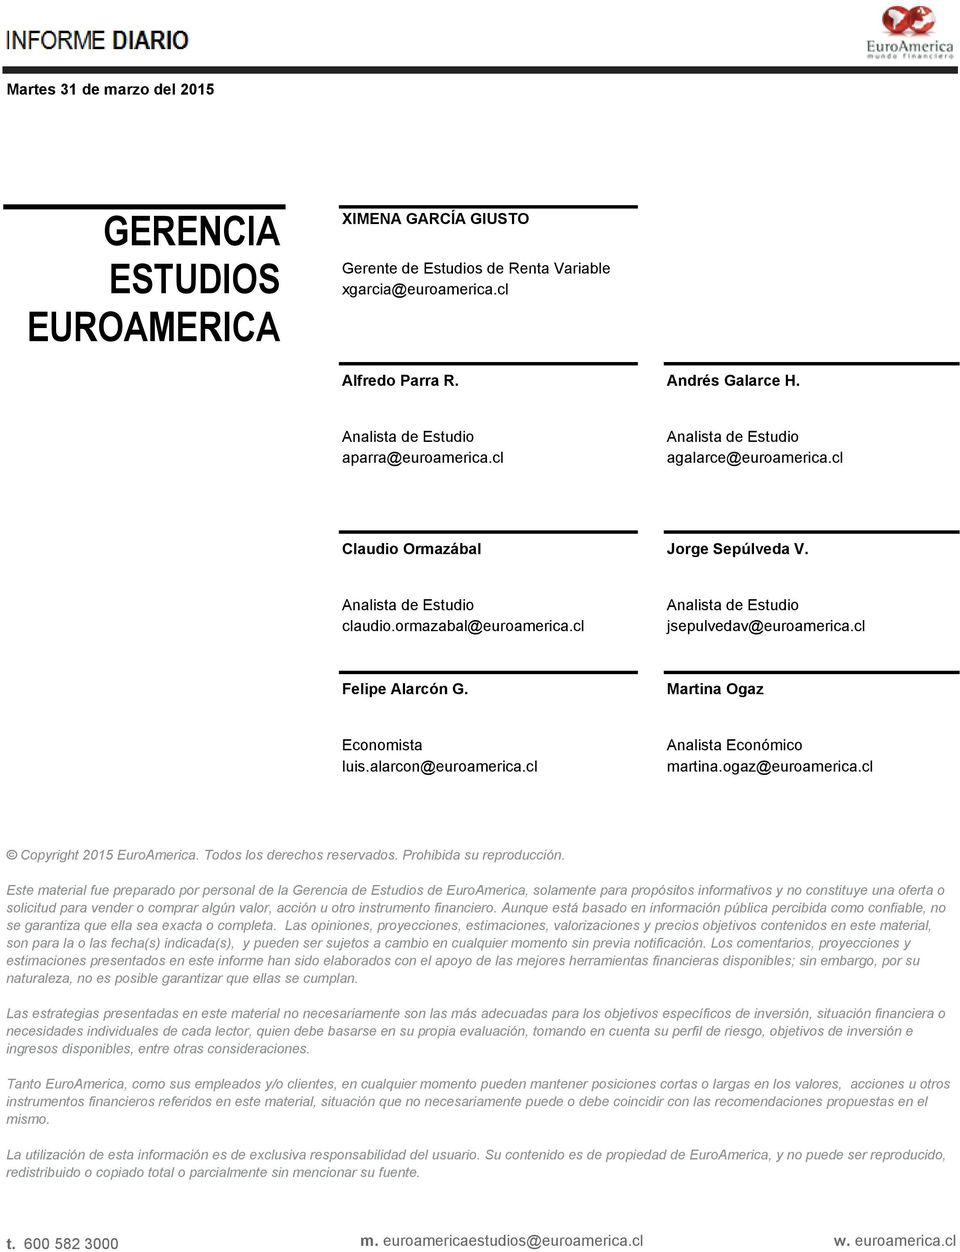 ogaz@euroamerica.cl 3,10% Copyright 2015 EuroAmerica. Todos los derechos reservados. Prohibida su reproducción.